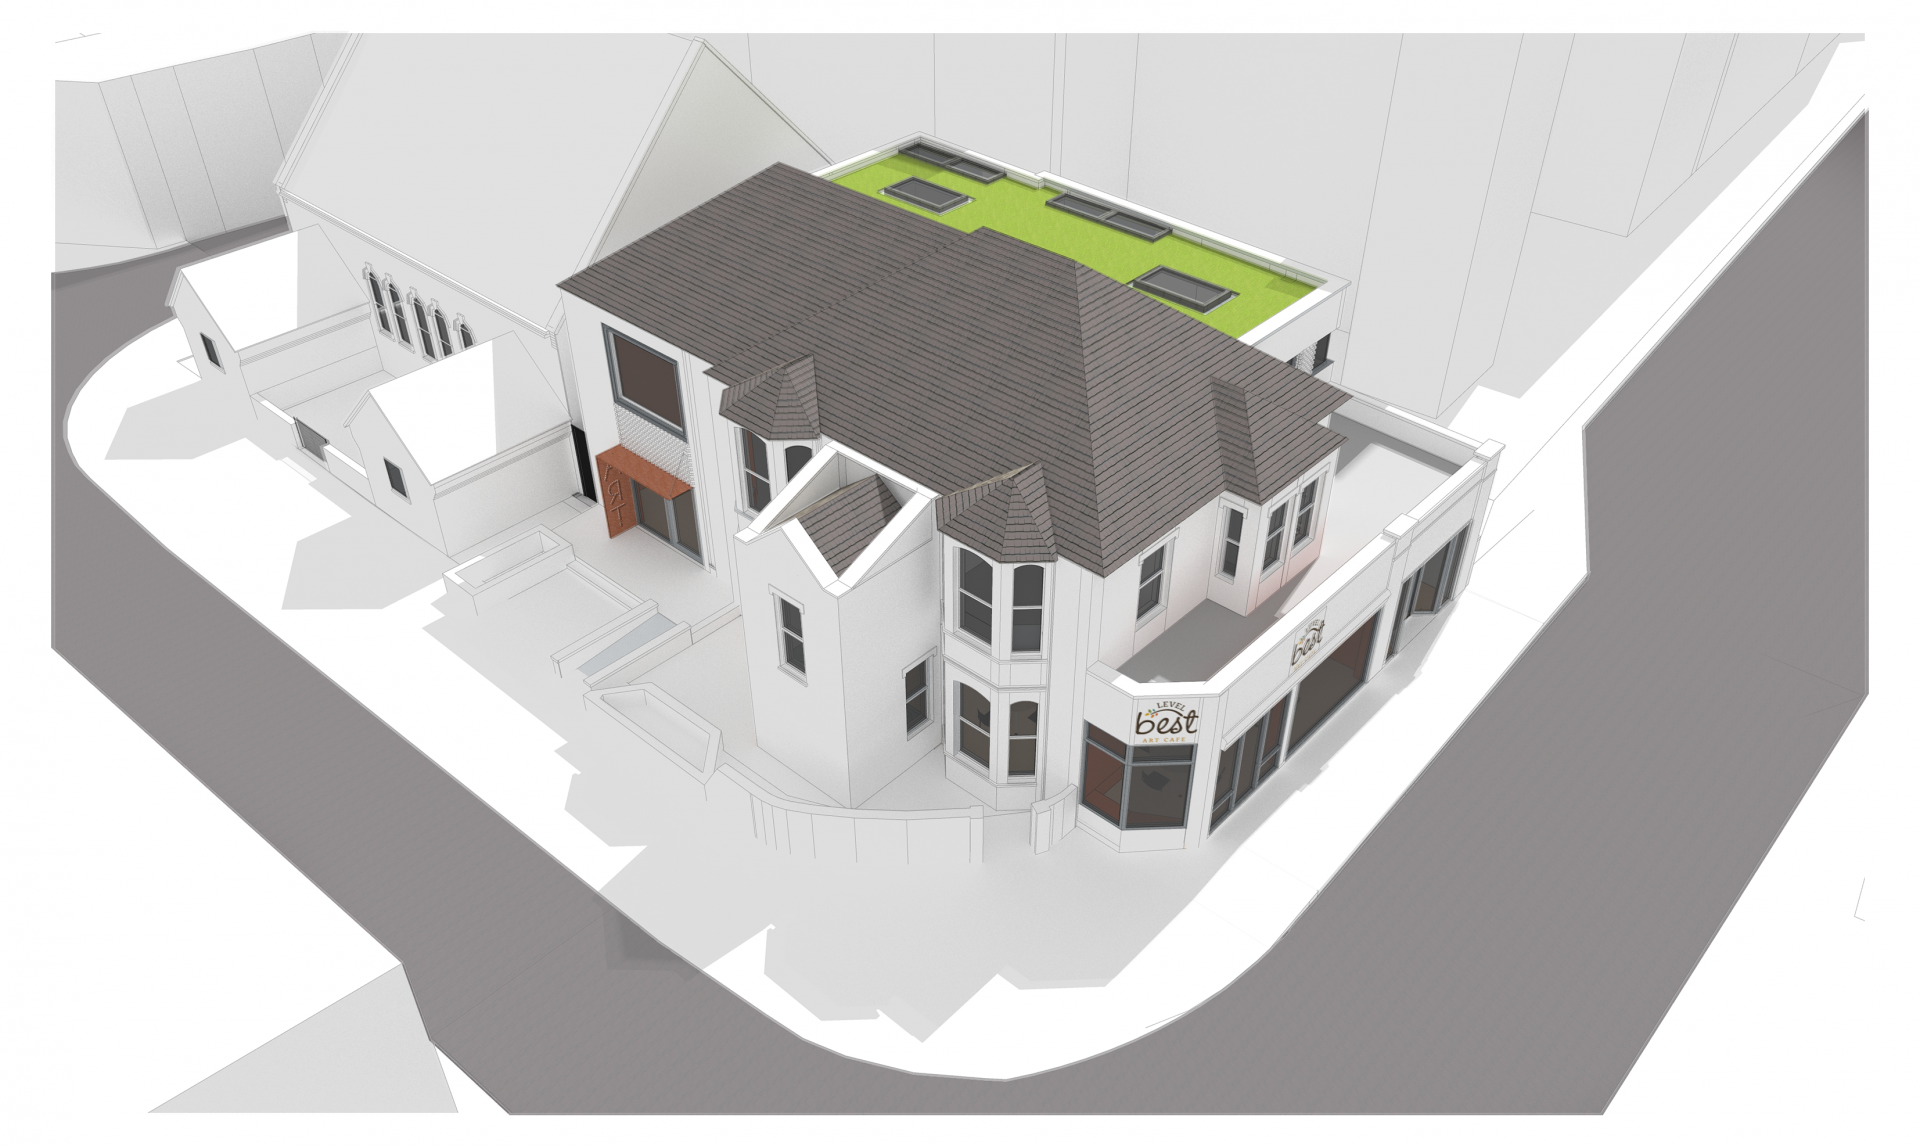 3D mage showing community centre proposal